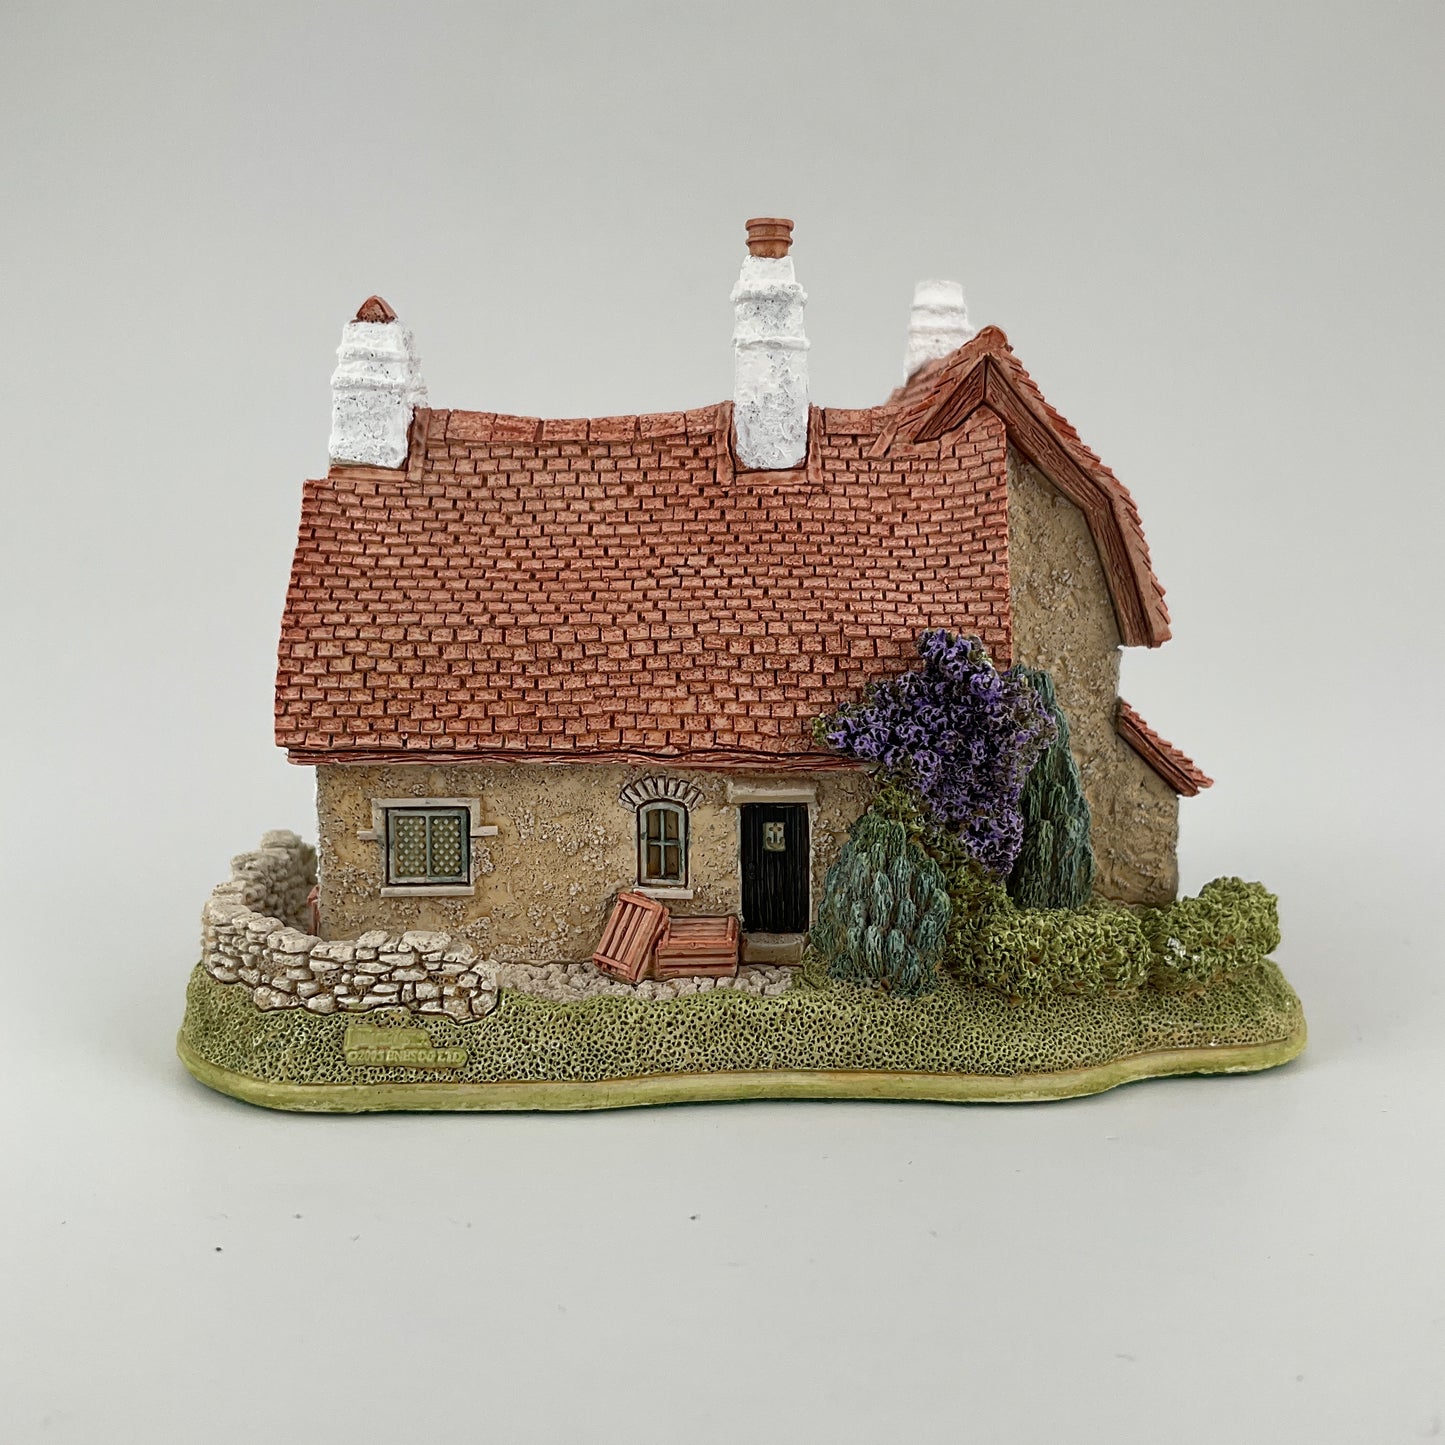 Lilliput Lane Model - "Burnham Thorpe Rectory"